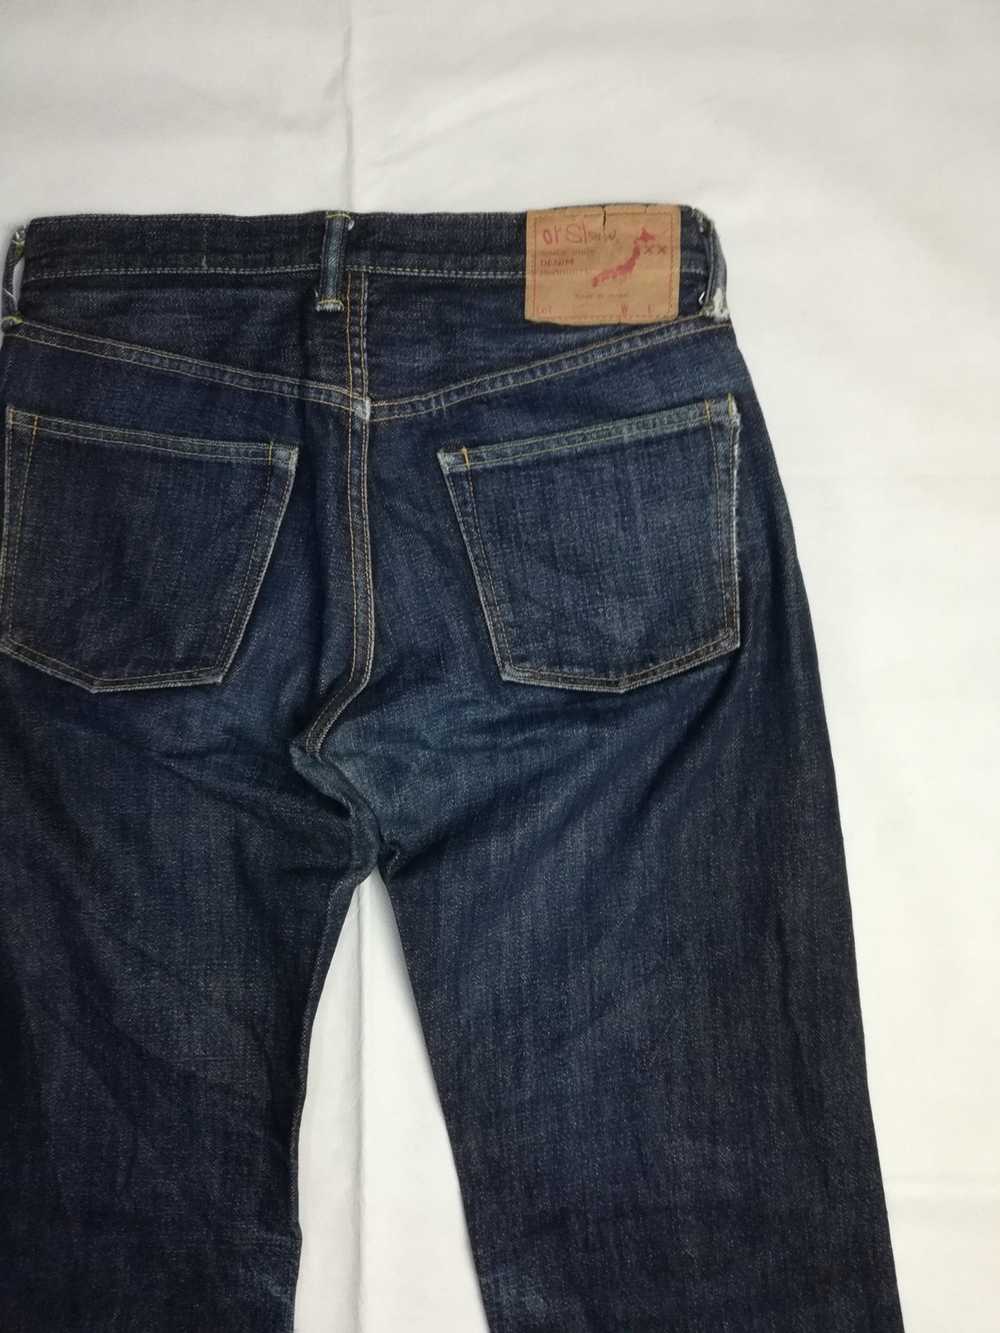 Orslow Orslow Selvedge Denim Jeans - image 8